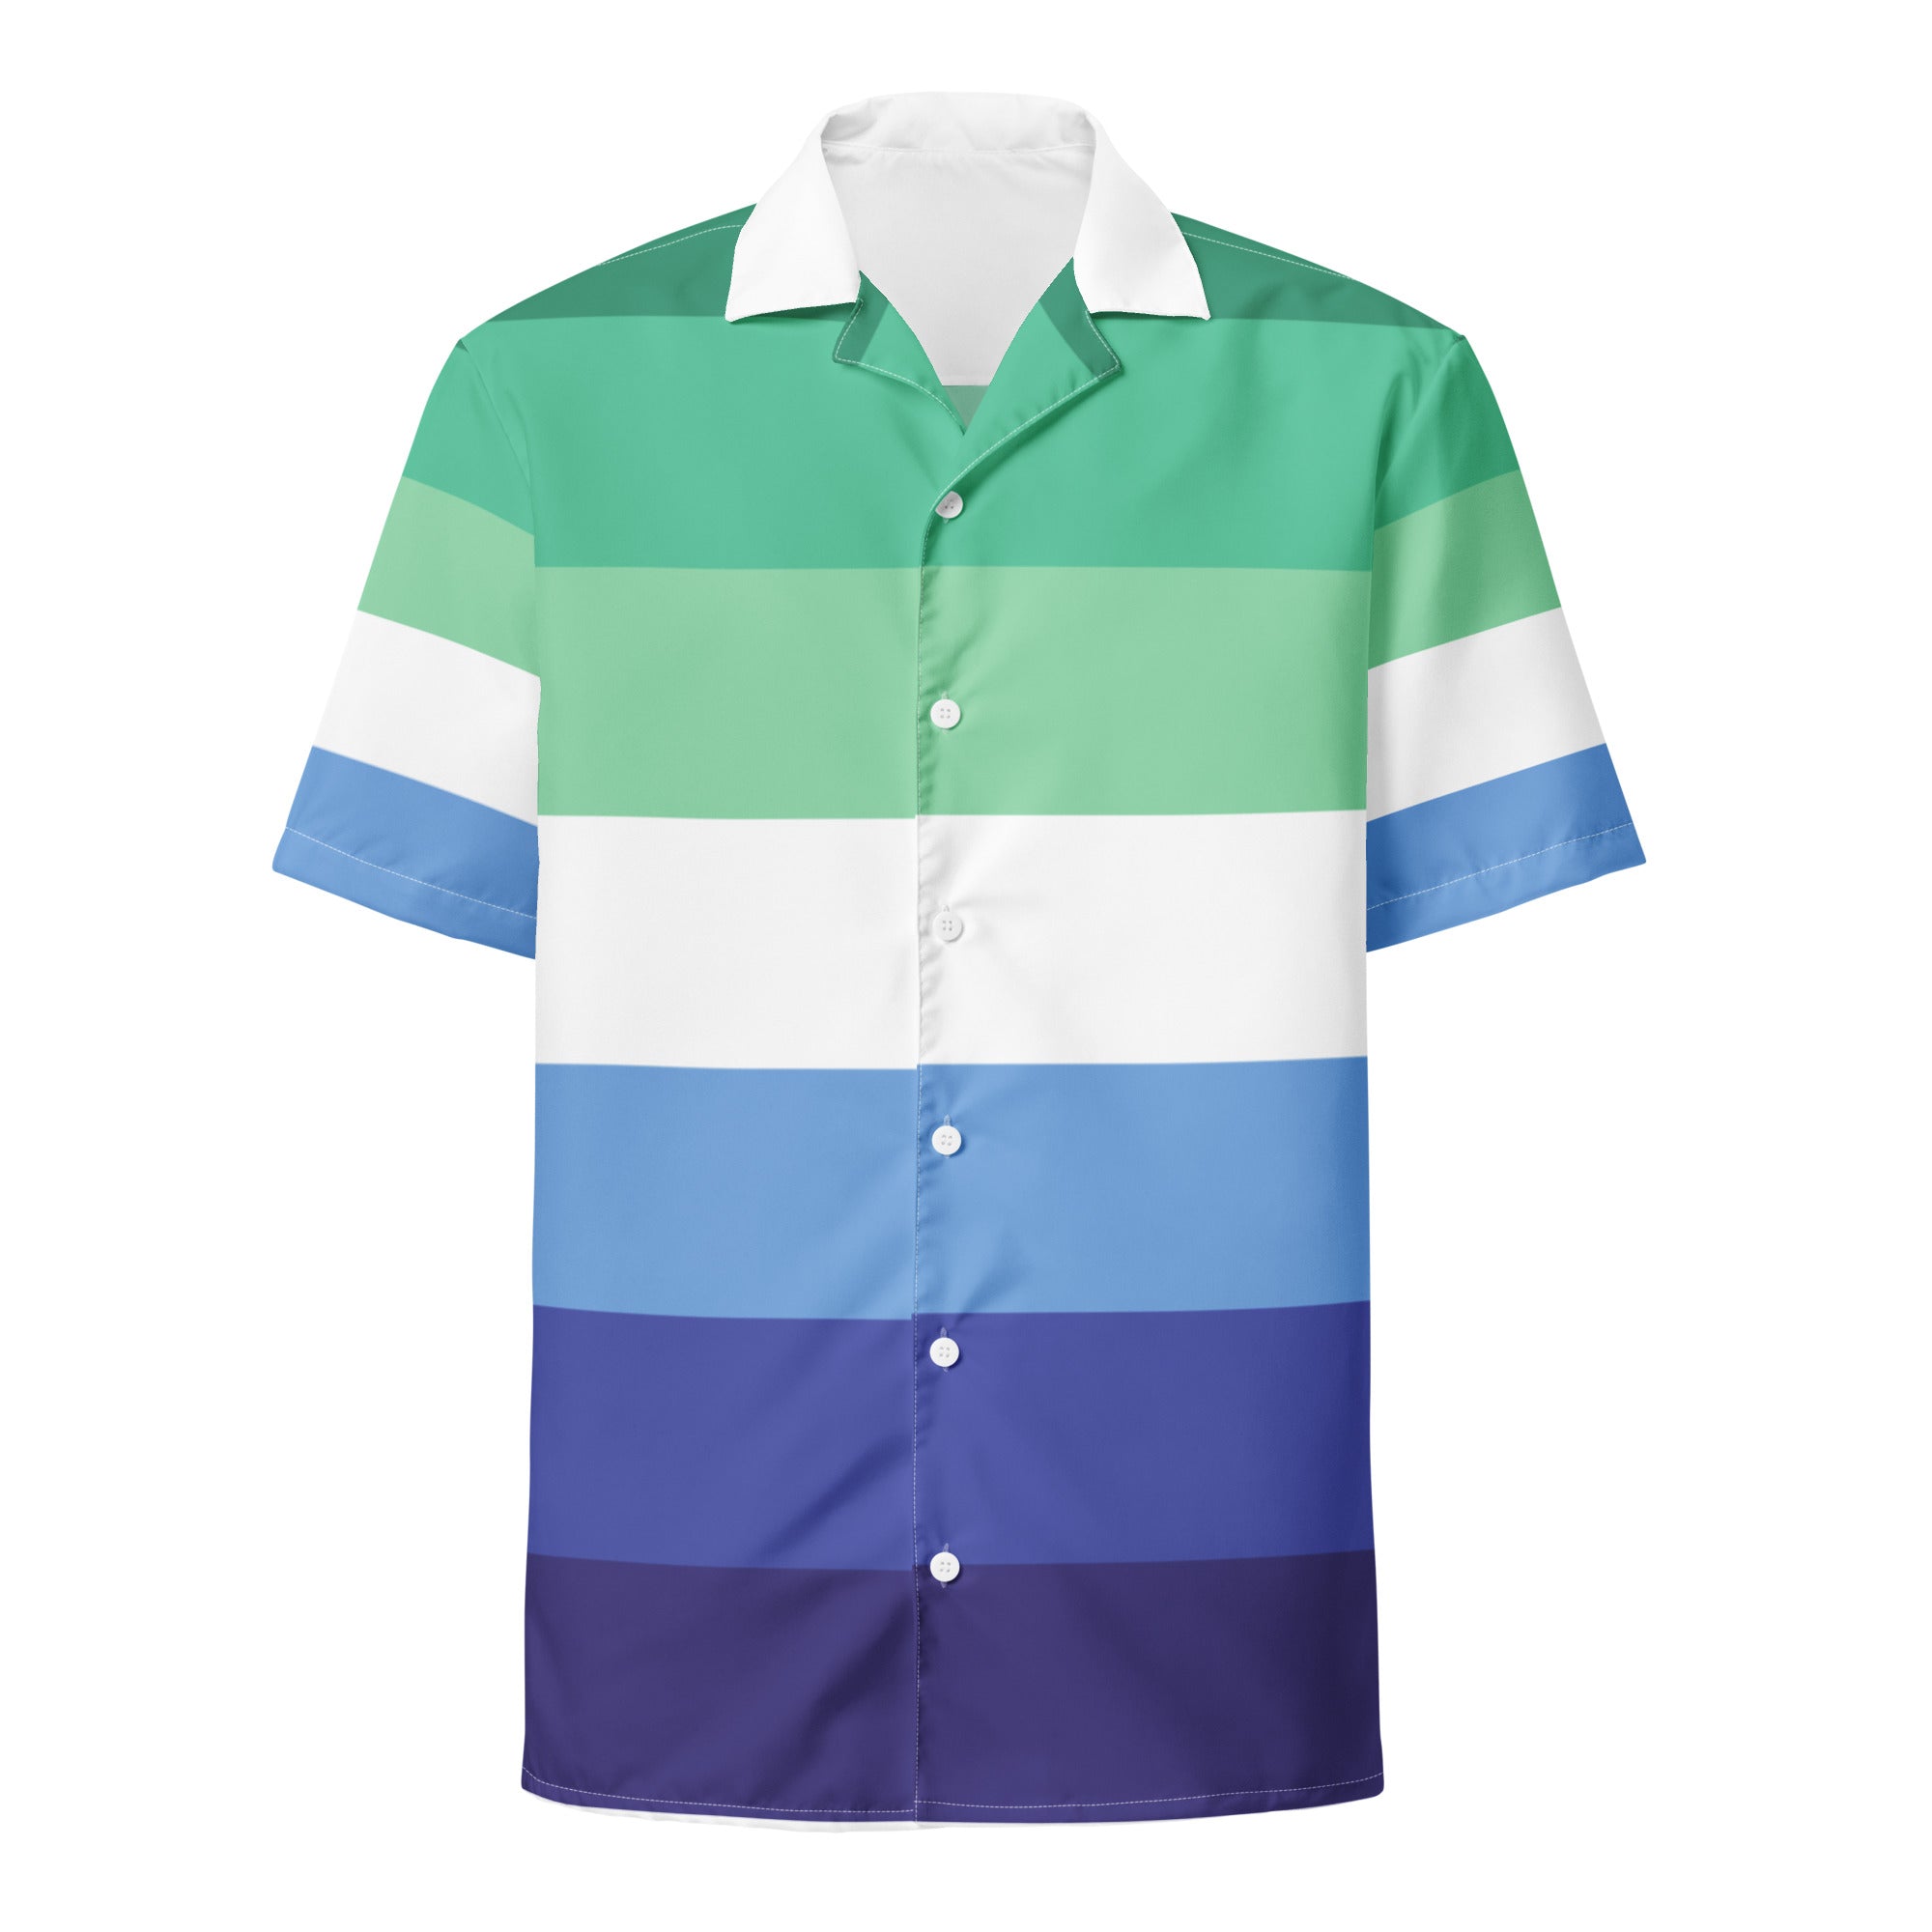 MLM Pride Flag Button Up Shirt